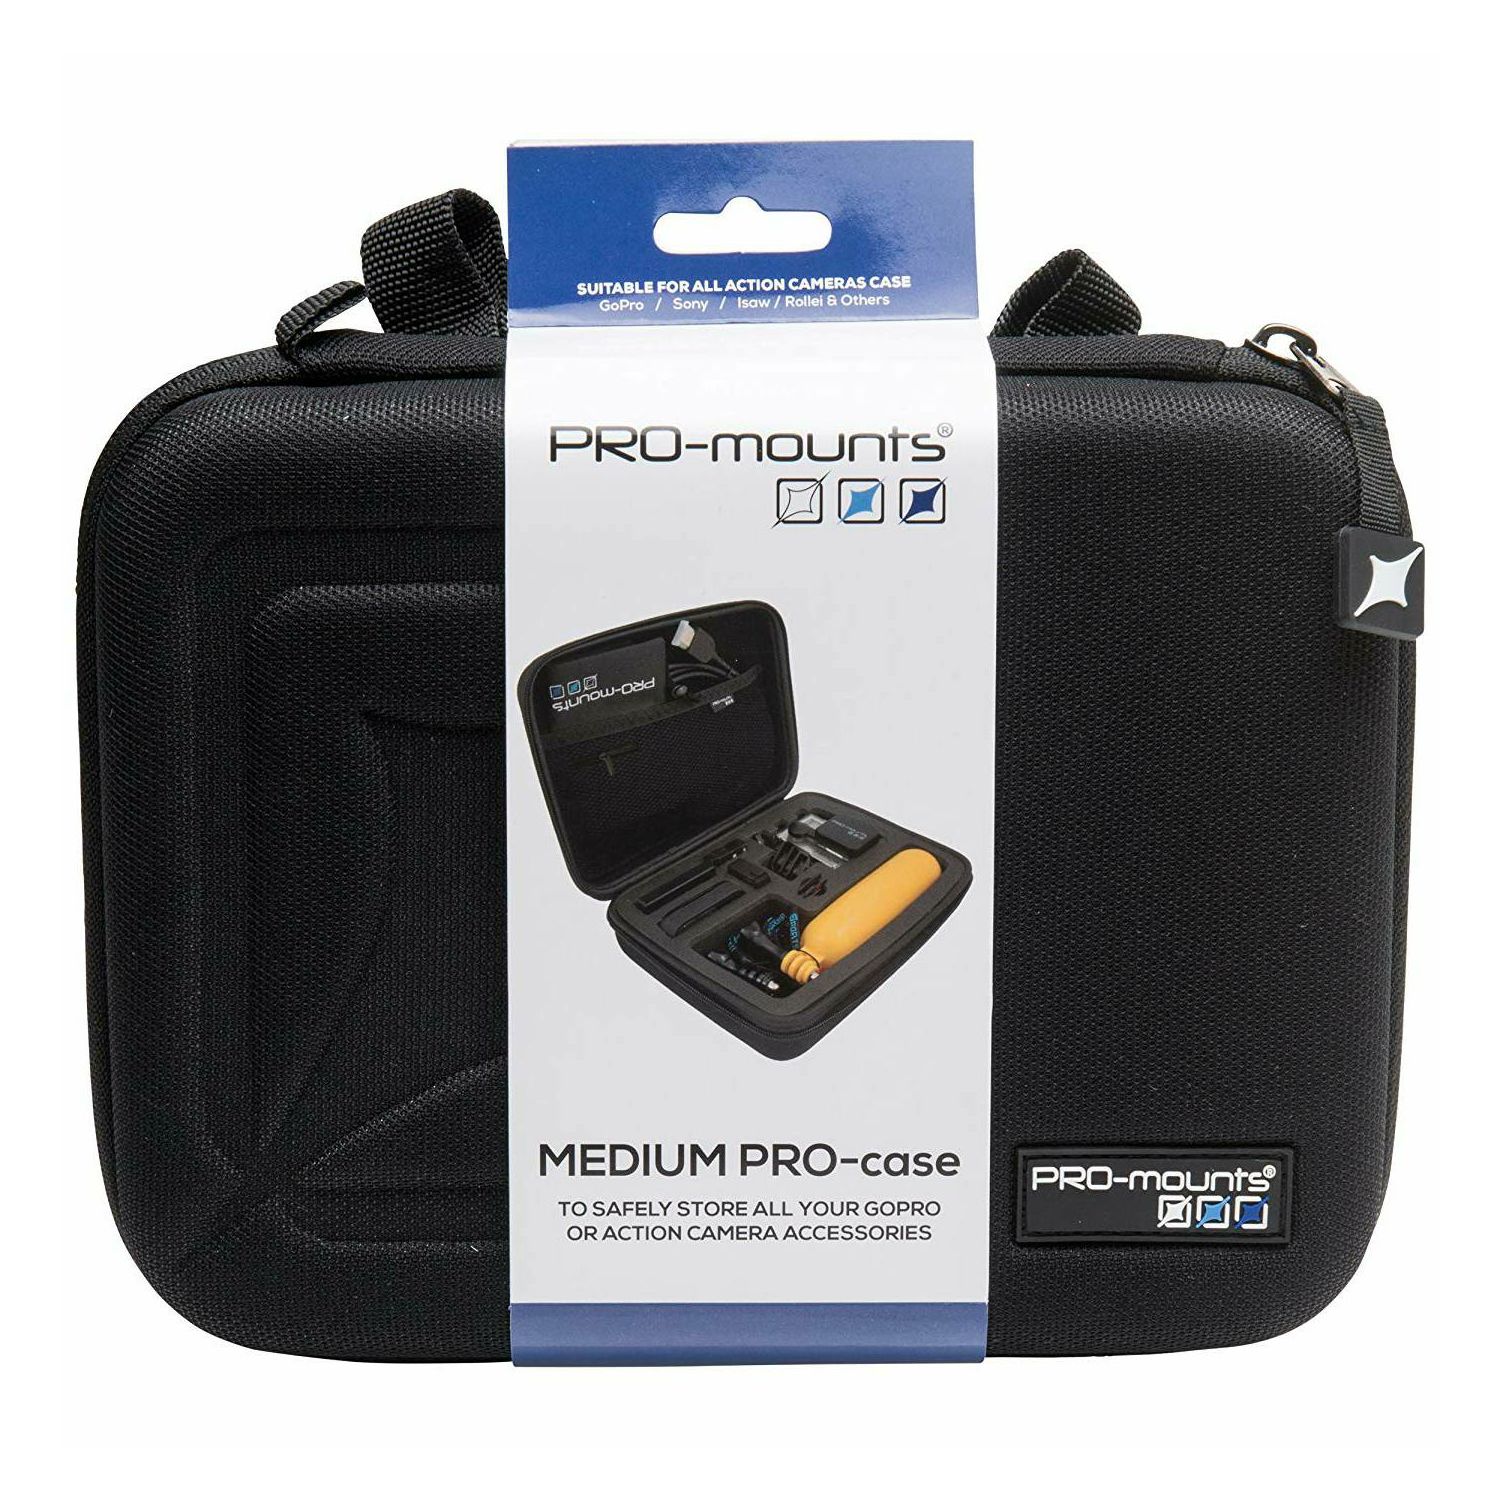 PRO-mounts Pro Hard Case Medium torbica za GoPro akcijske kamere